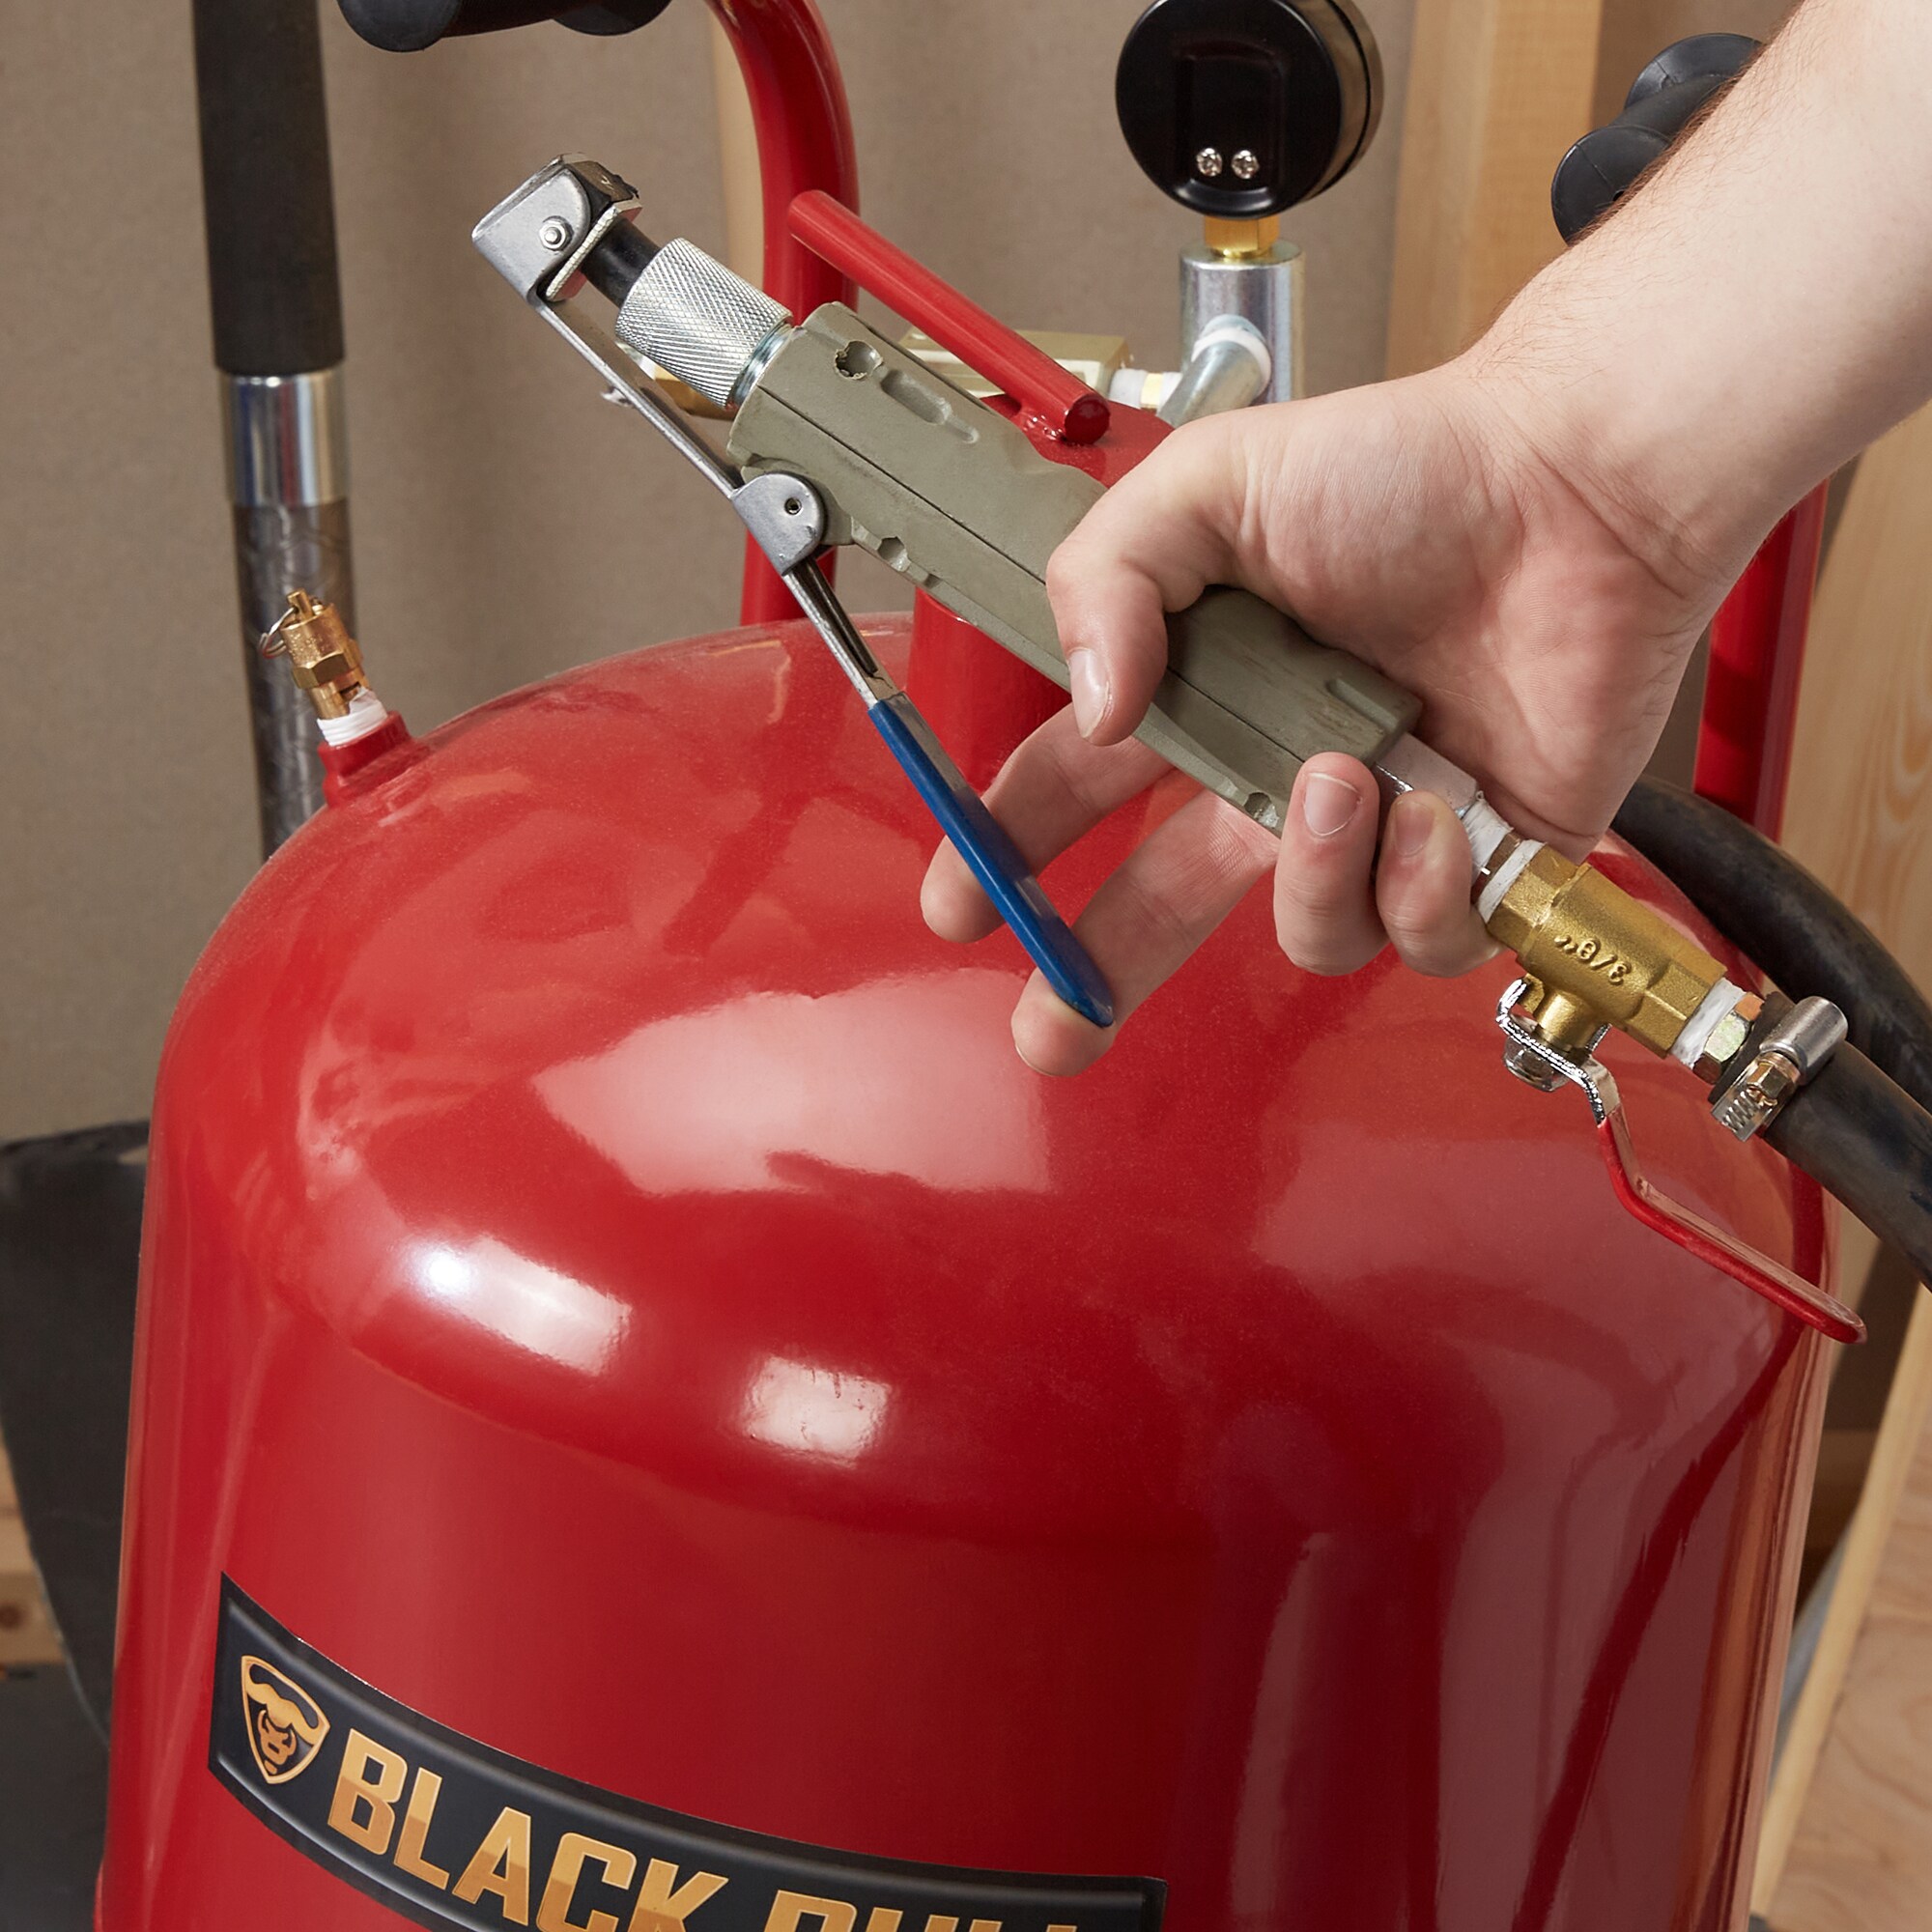 Black Bull 100-lbs Pressure Portable Media Blaster at